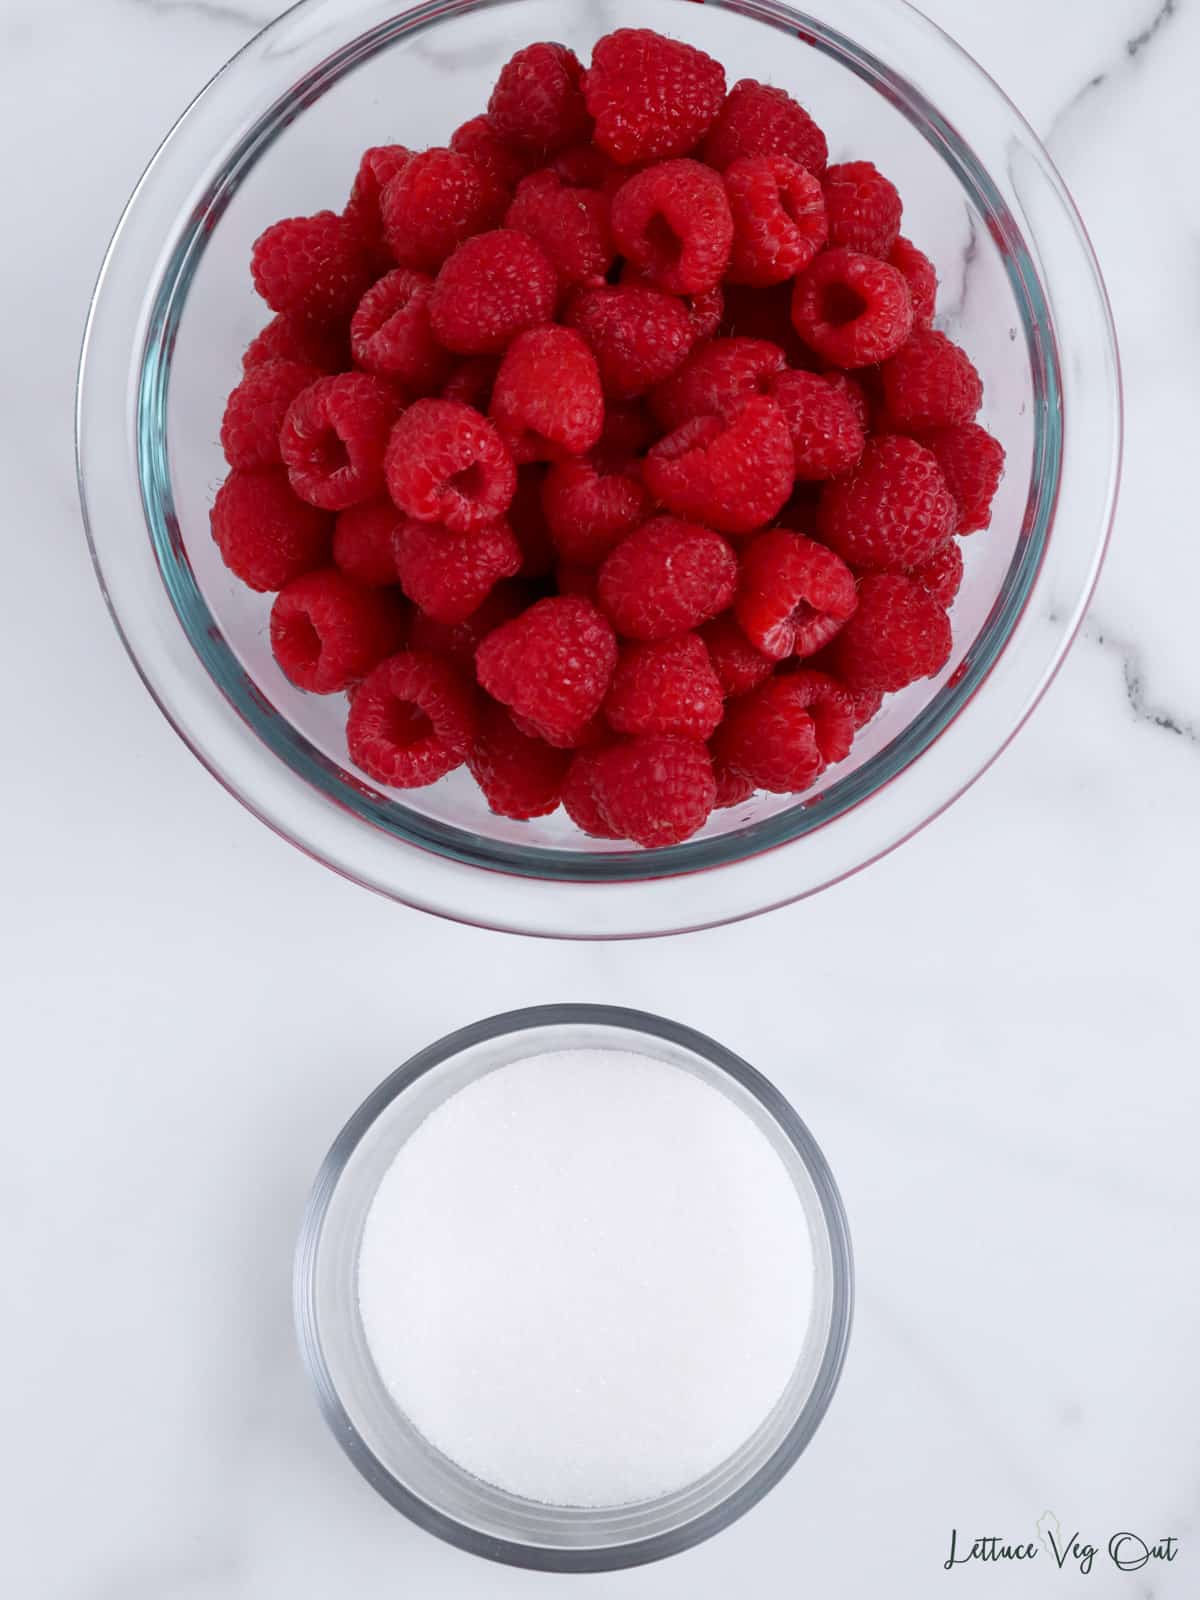 Bowl of fresh raspberries and bowl of sugar.